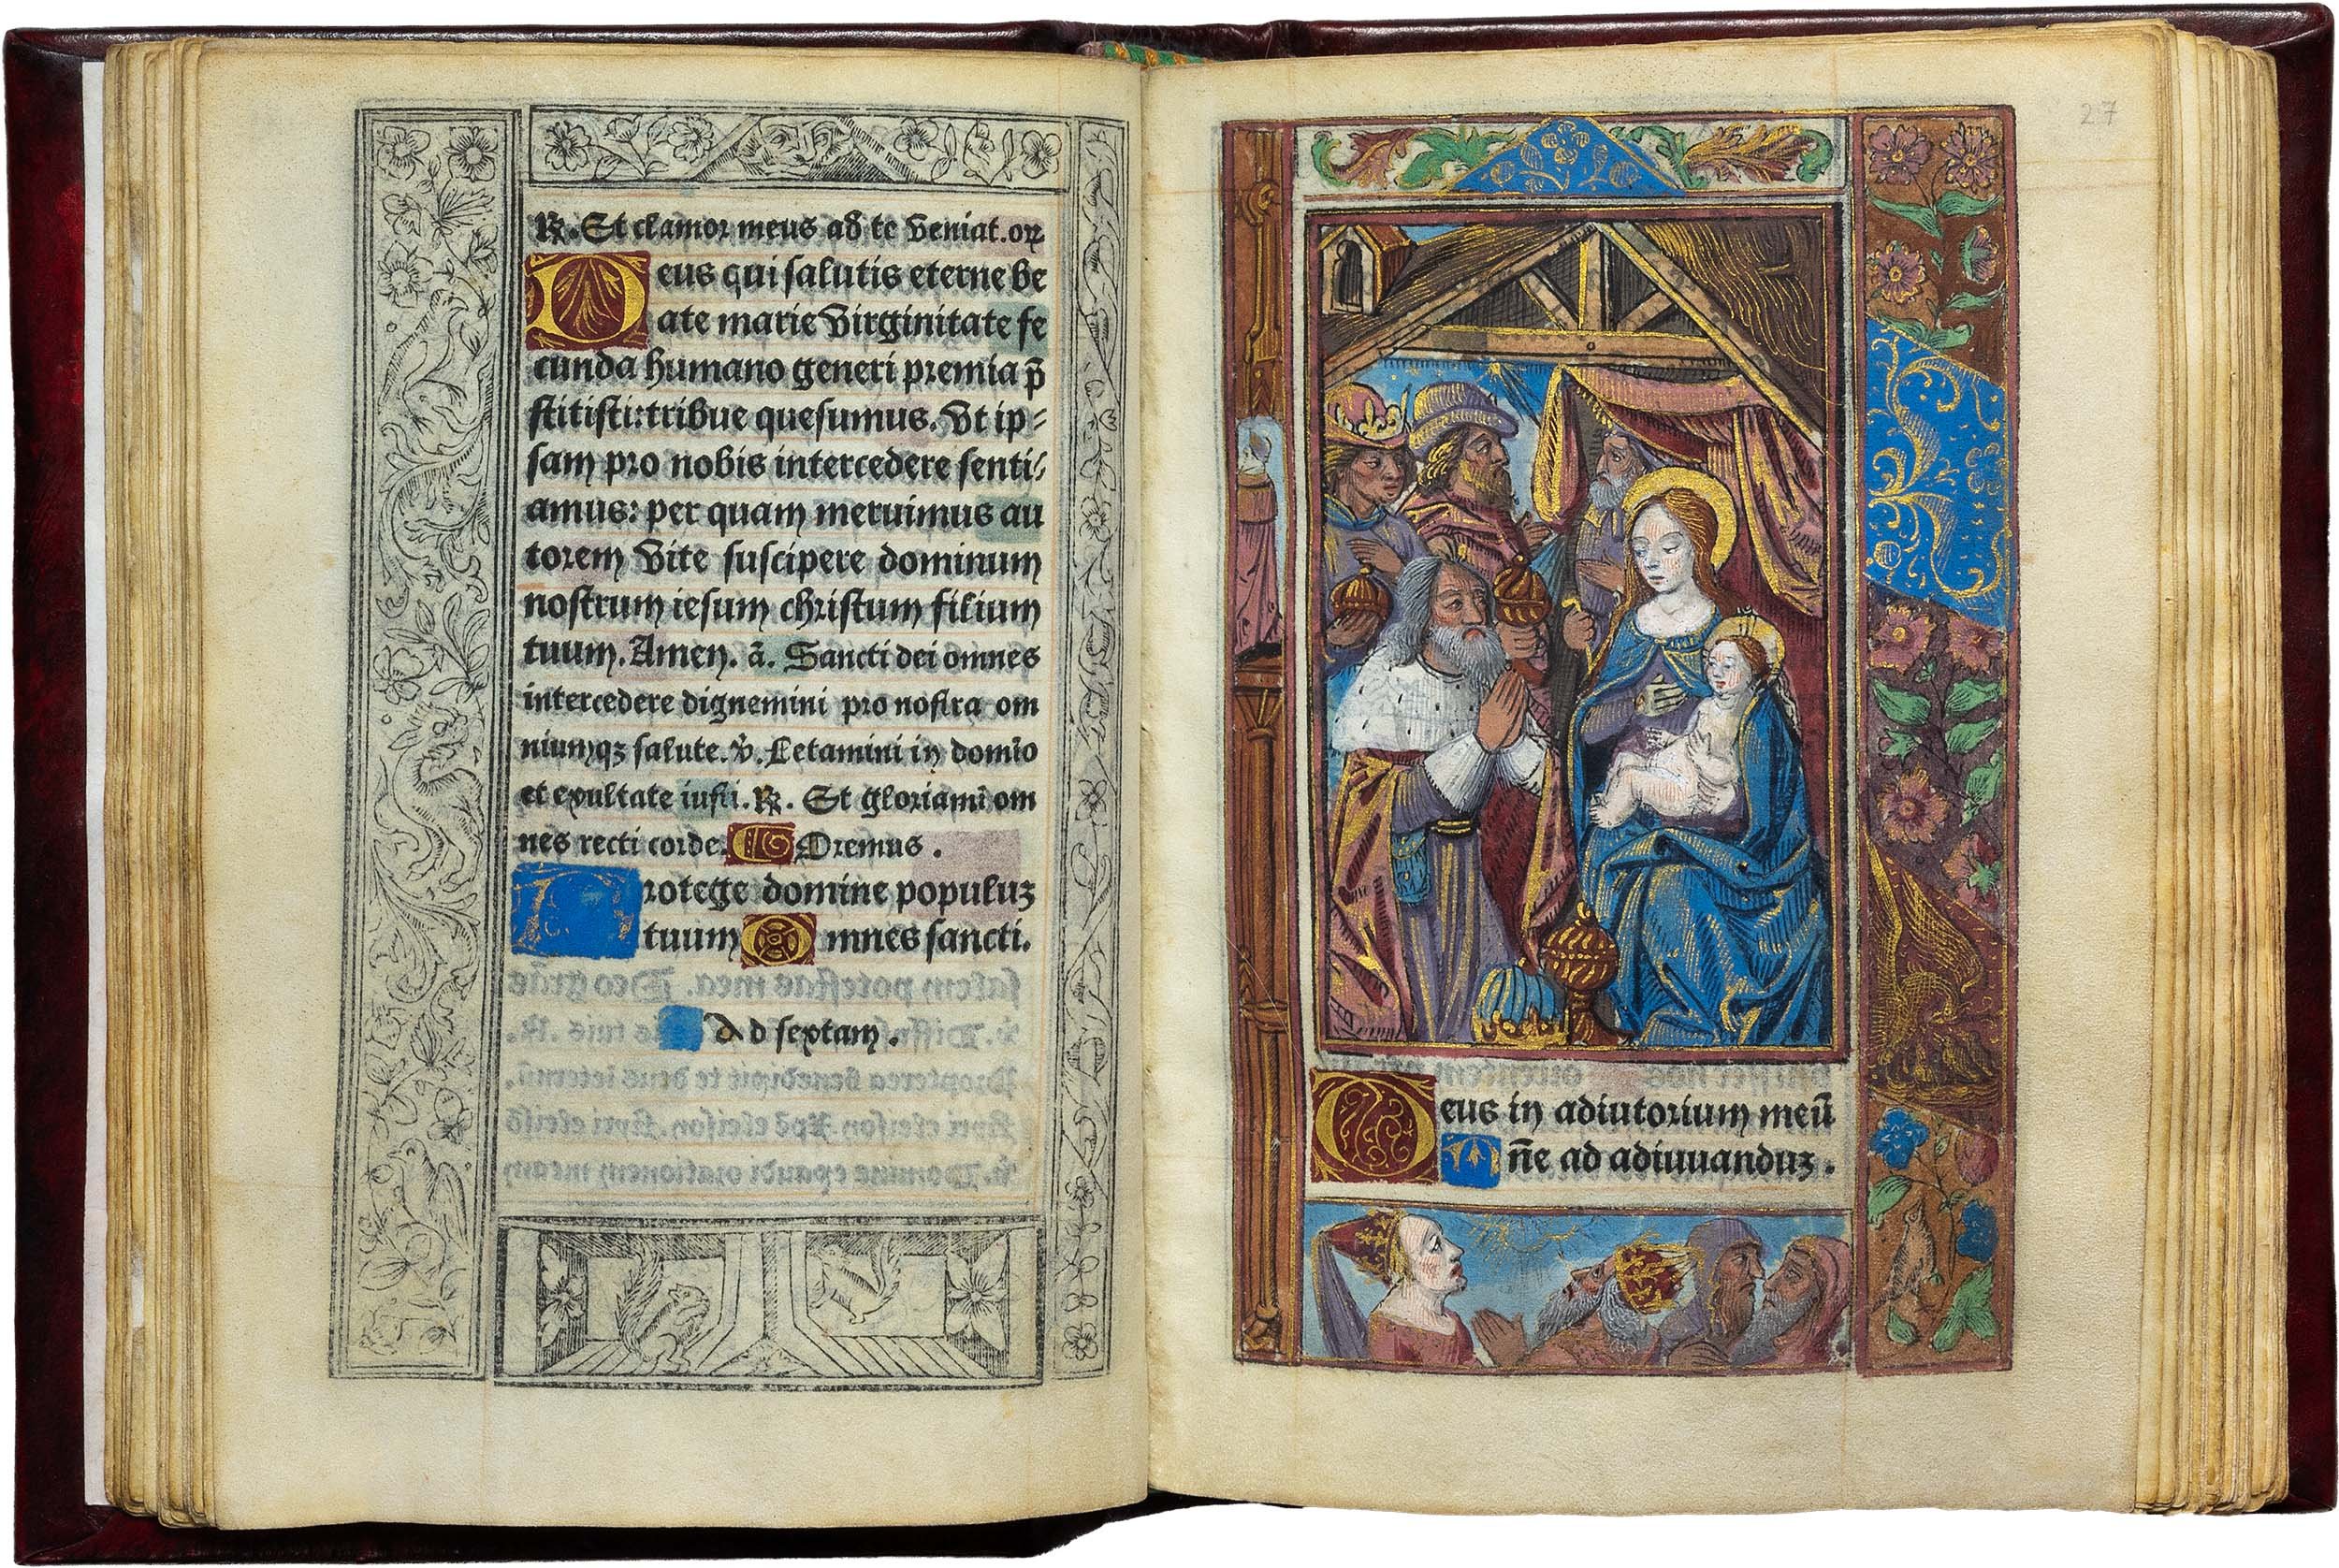 horae-bmv-early-printed-book-of-hours-1487-dupre-28.jpg